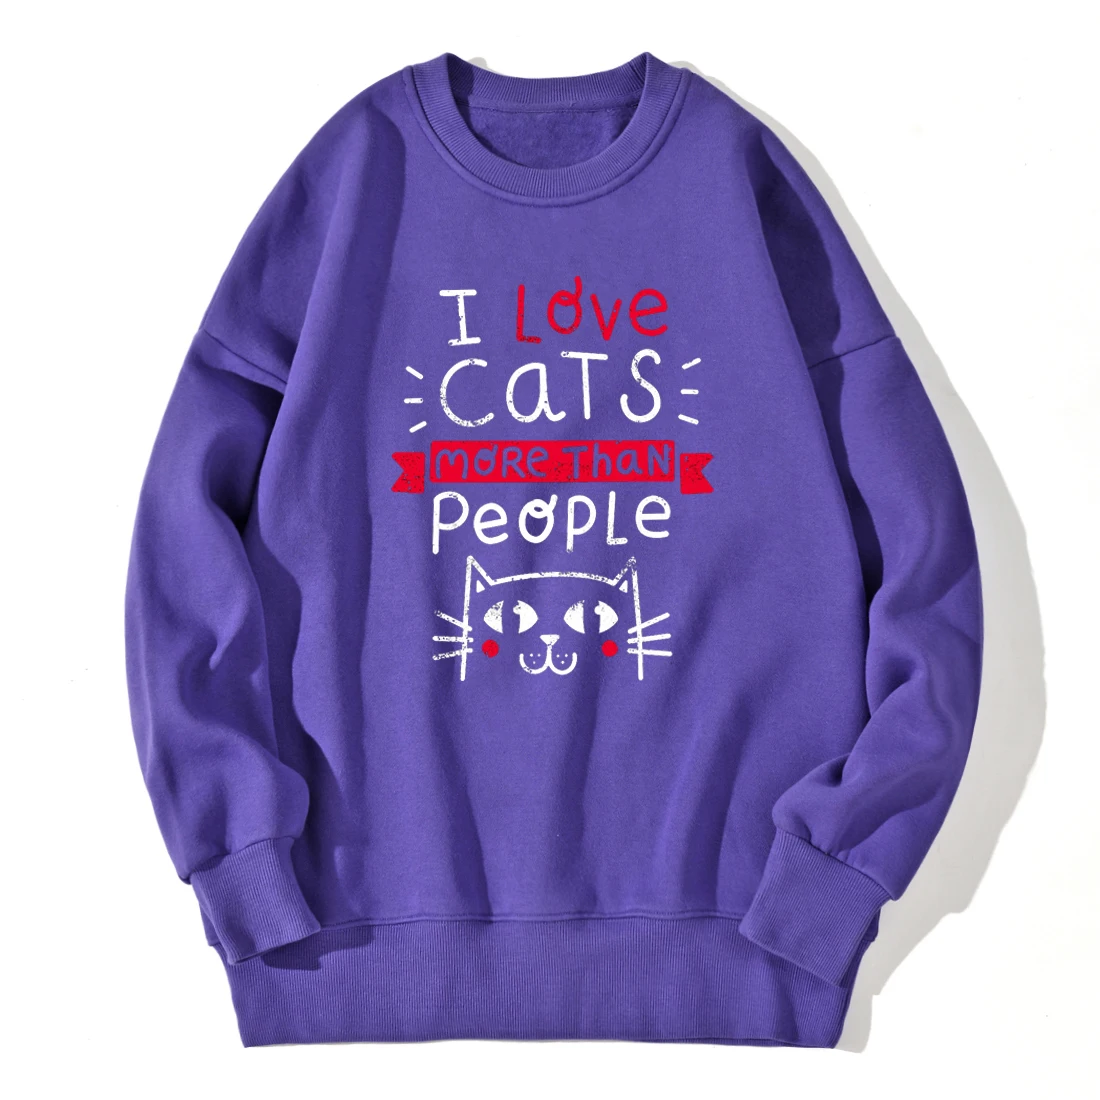 

Drop shoulders Mens Sweatshirt I Love Cats More Than People Harajuku Casual Tops Outwear Clothing Autumn Sudaderas Masculino